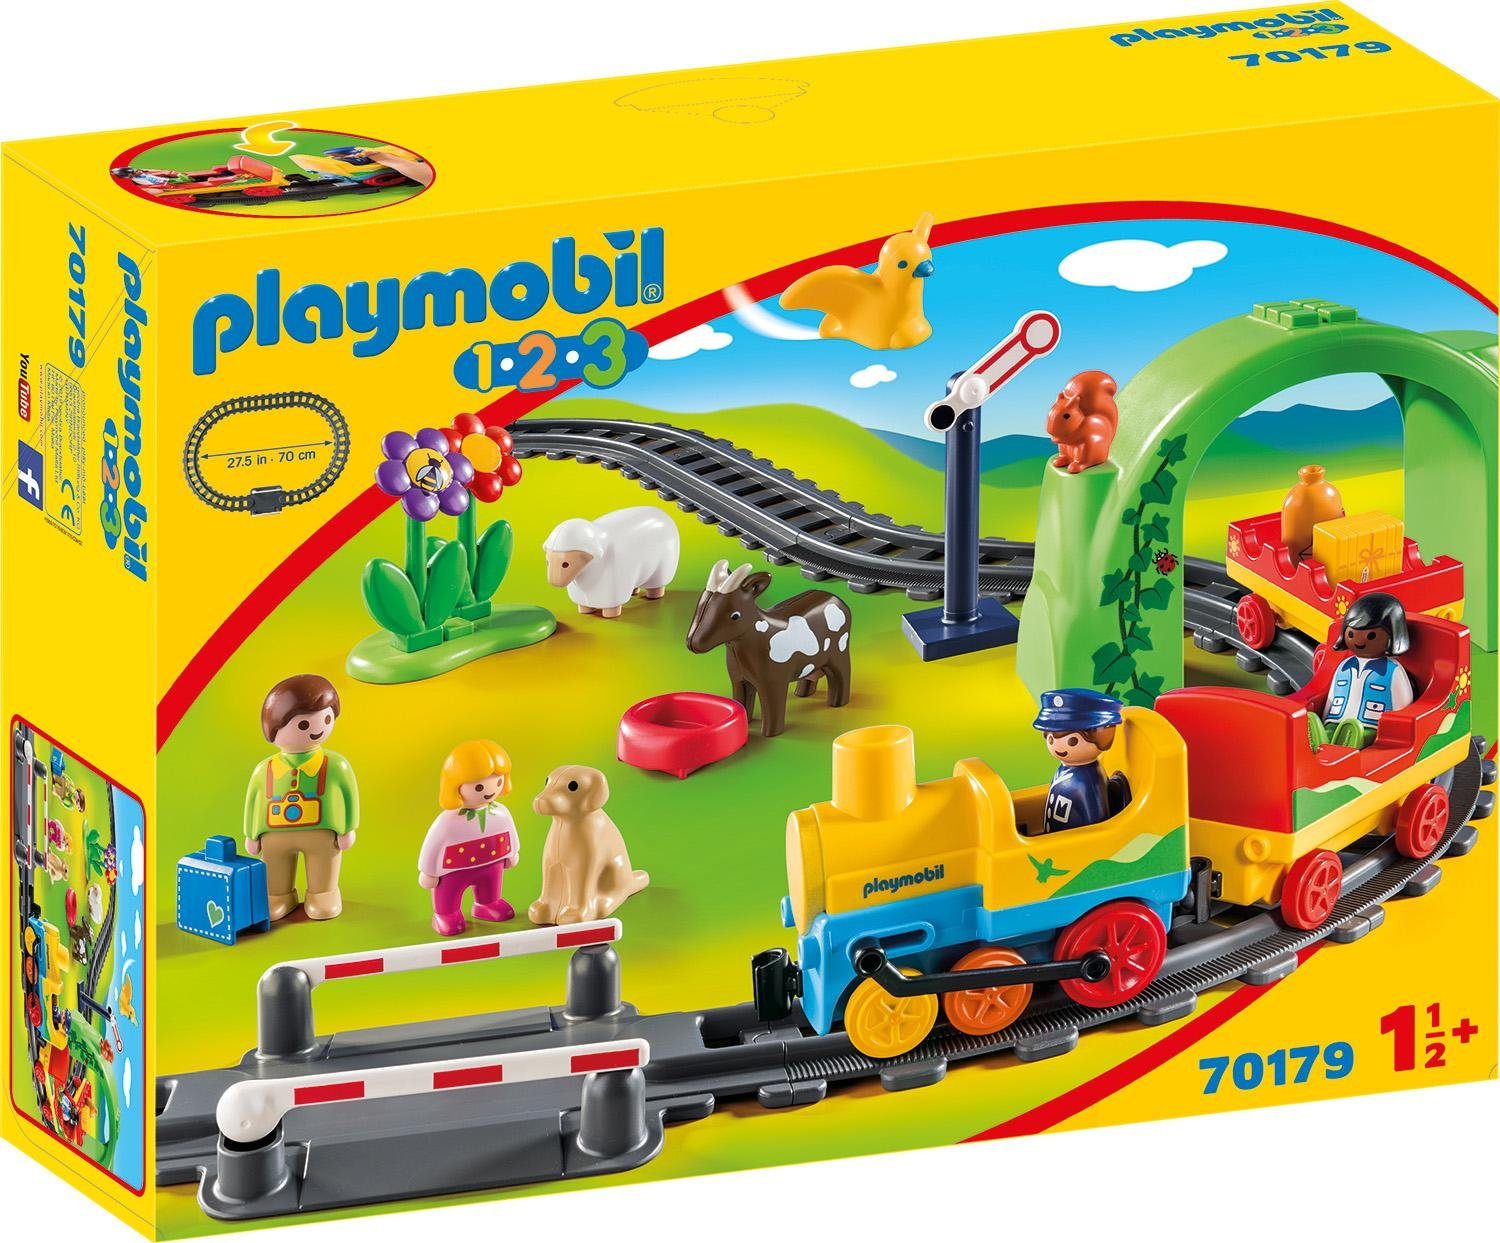 Playmobil® Konstruktions-Spielset Eisenbahn erste 1-2-3, Made (70179), Meine Playmobil in Europe